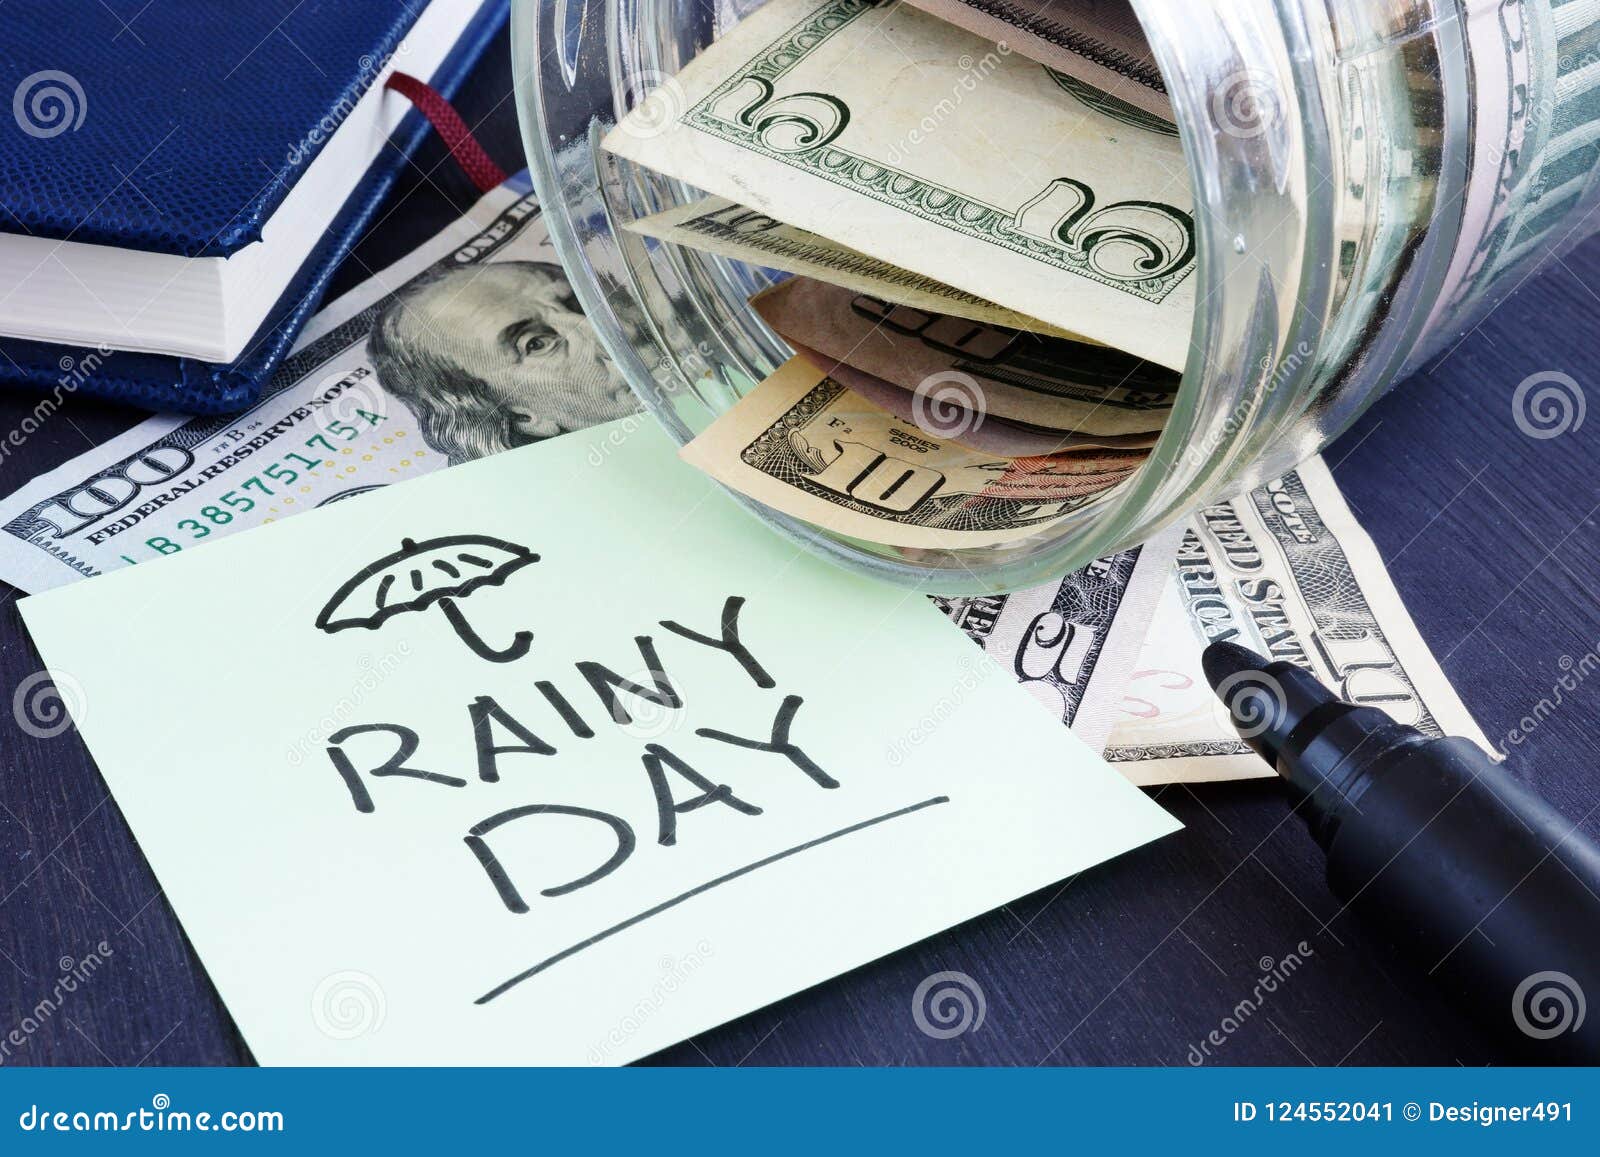 rainy day fund savings. jar with dollar bills.